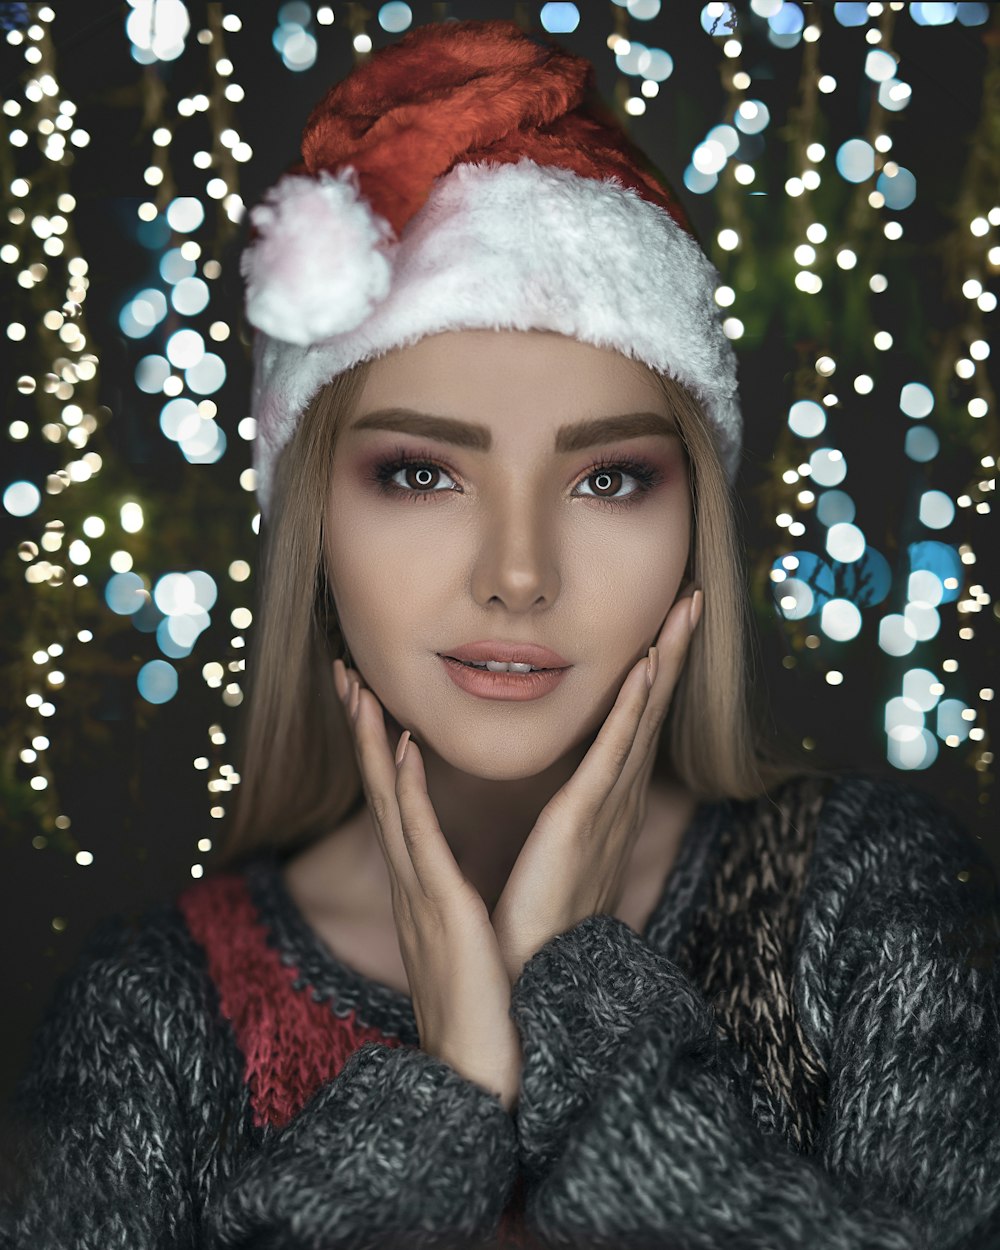 woman wearing black sweater and Santa hat